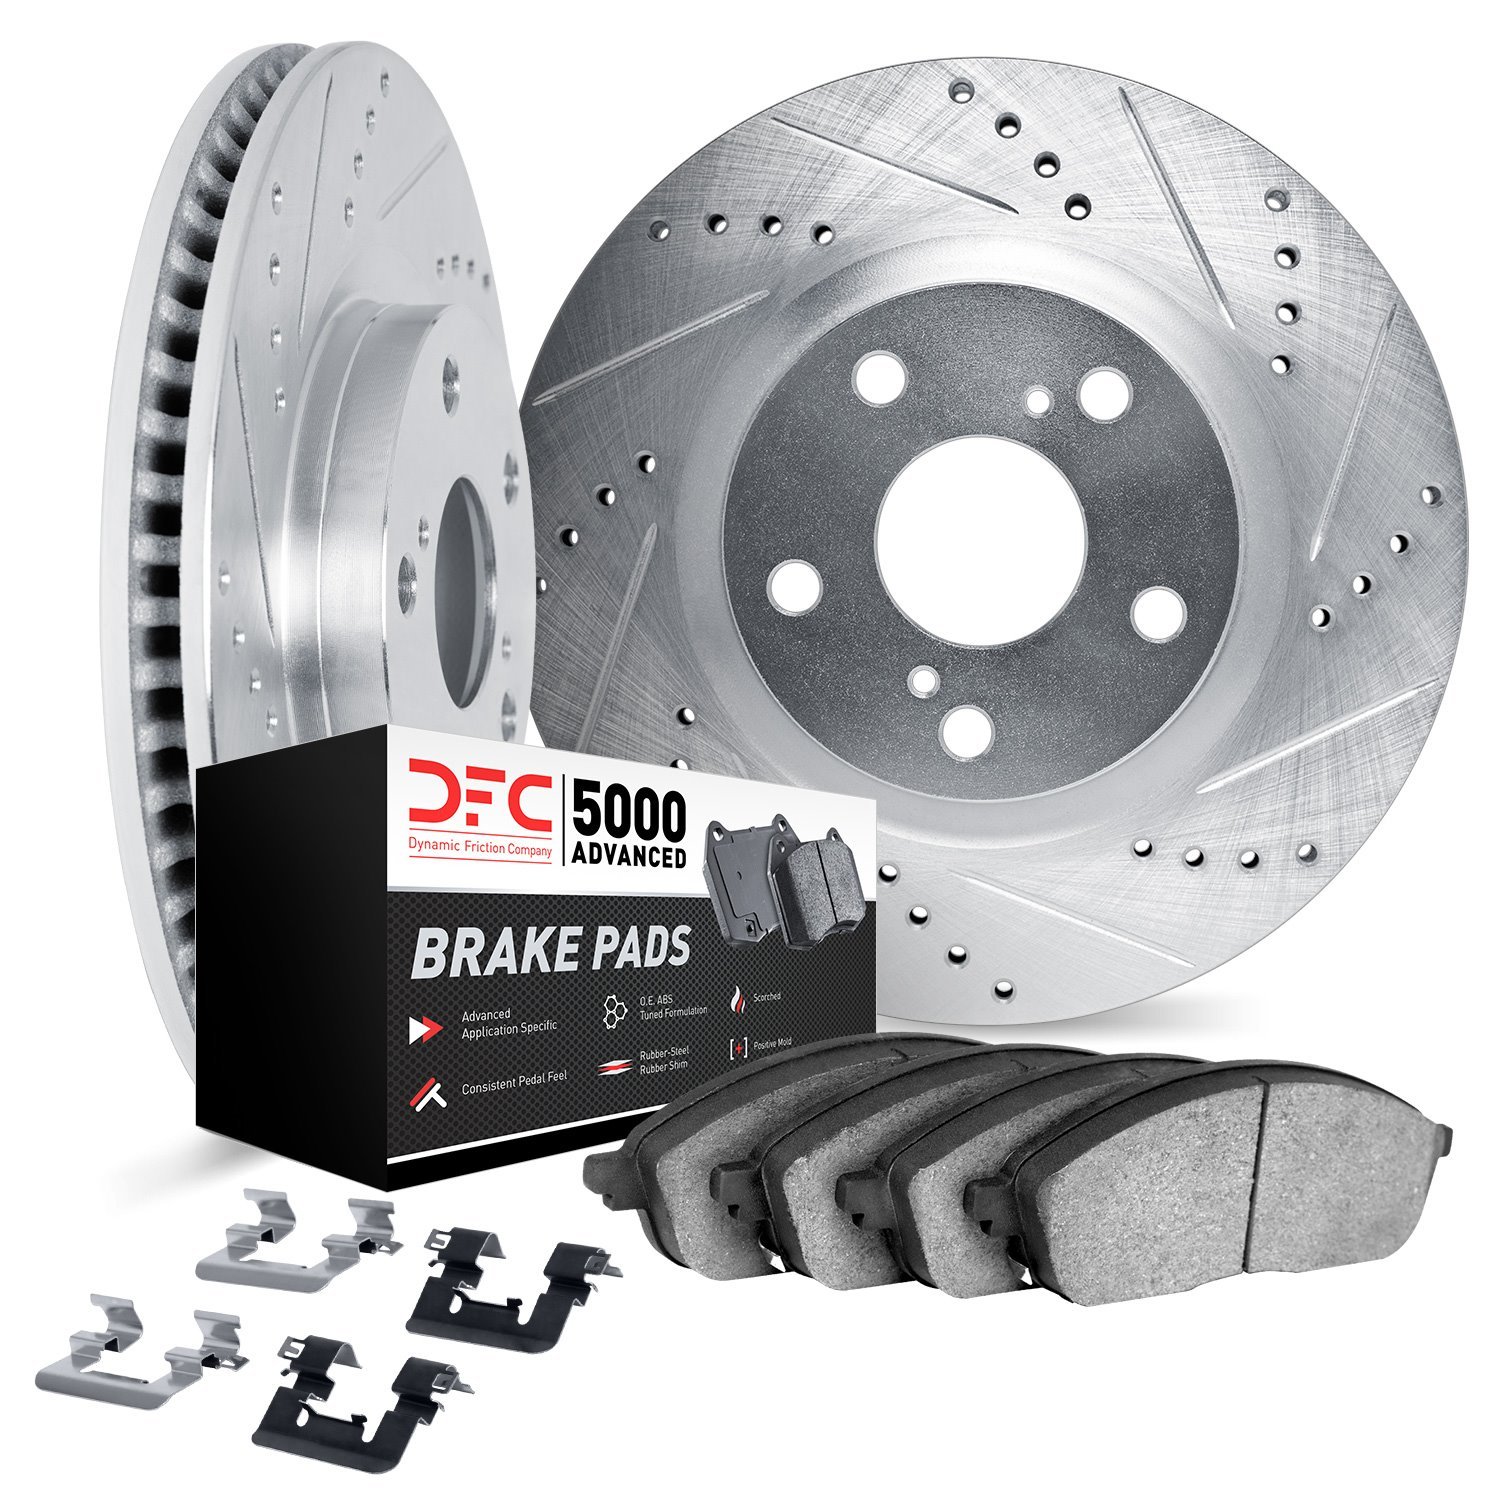 7512-31617 Drilled/Slotted Brake Rotors w/5000 Advanced Brake Pads Kit & Hardware [Silver], Fits Select Multiple Makes/Models, P